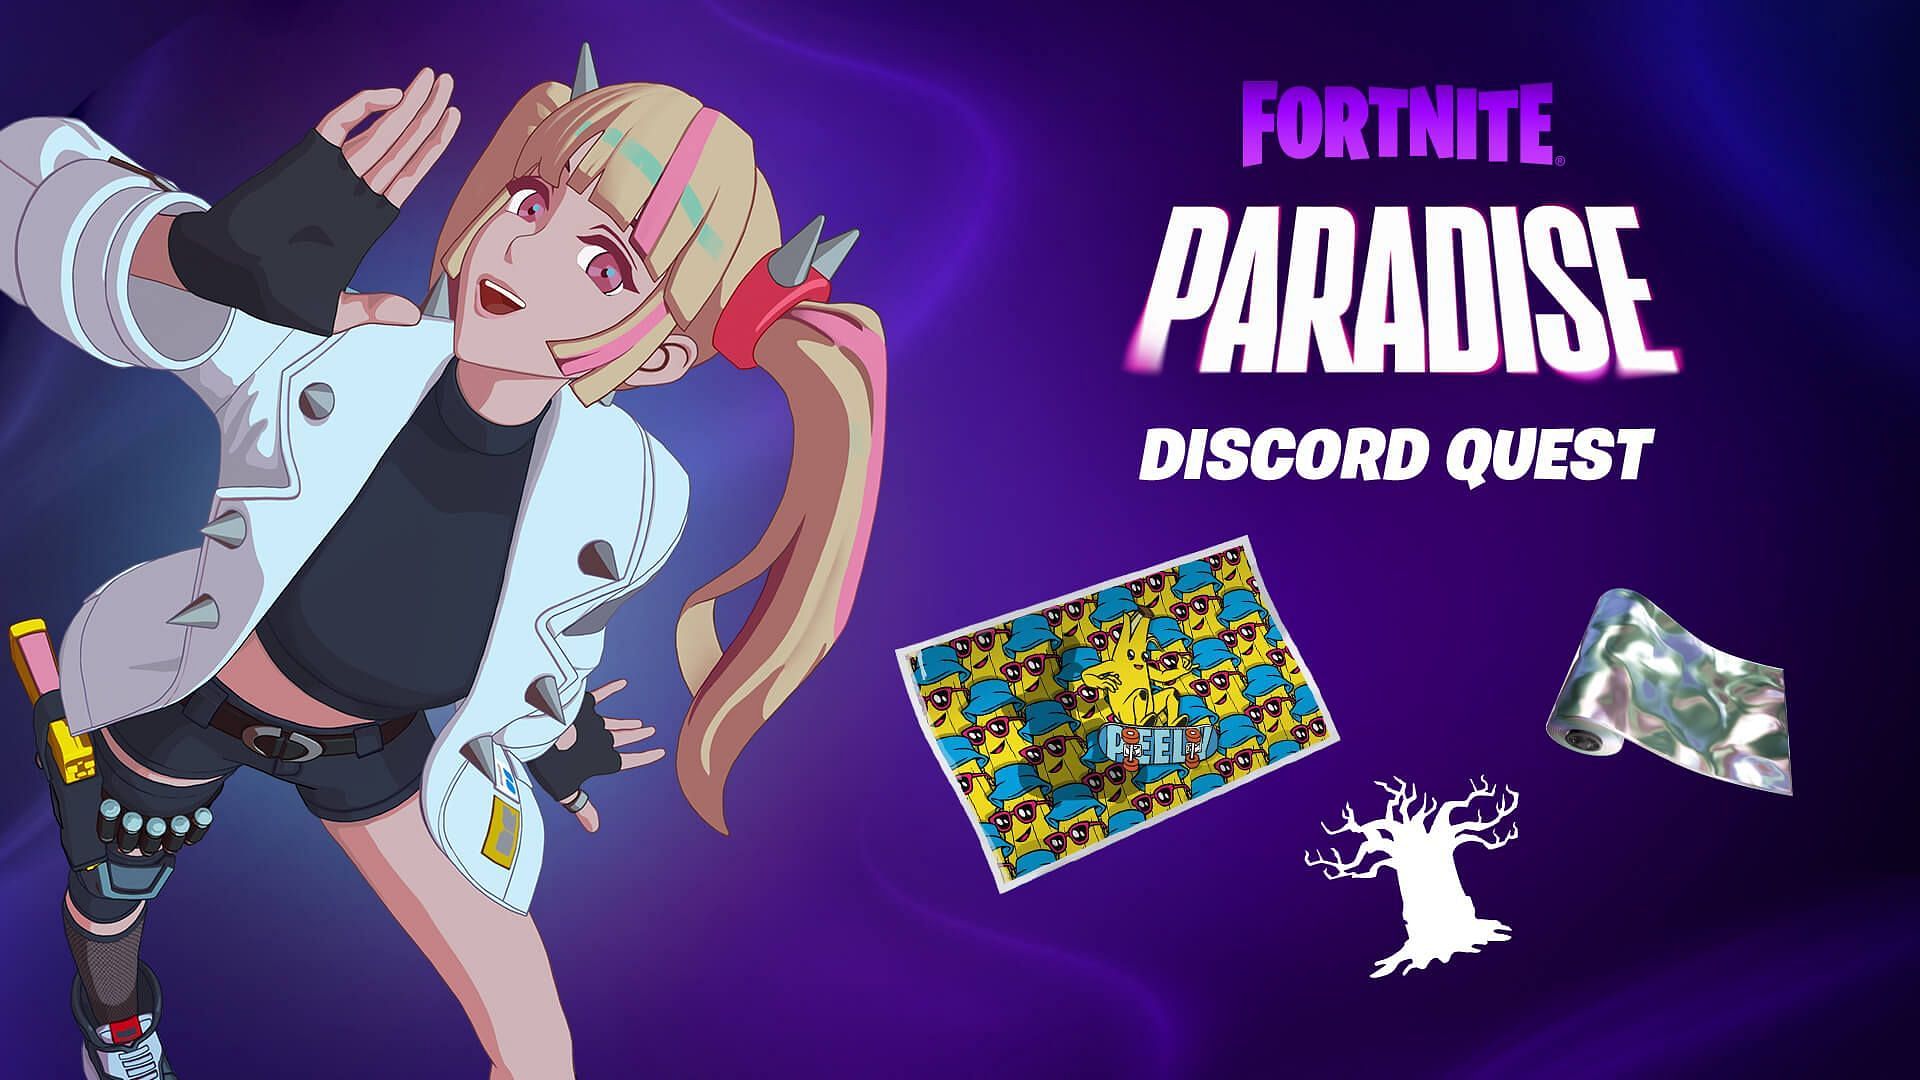 Fortnite Paradise Discord Quests guide (Image via Epic Games/Fortnite)